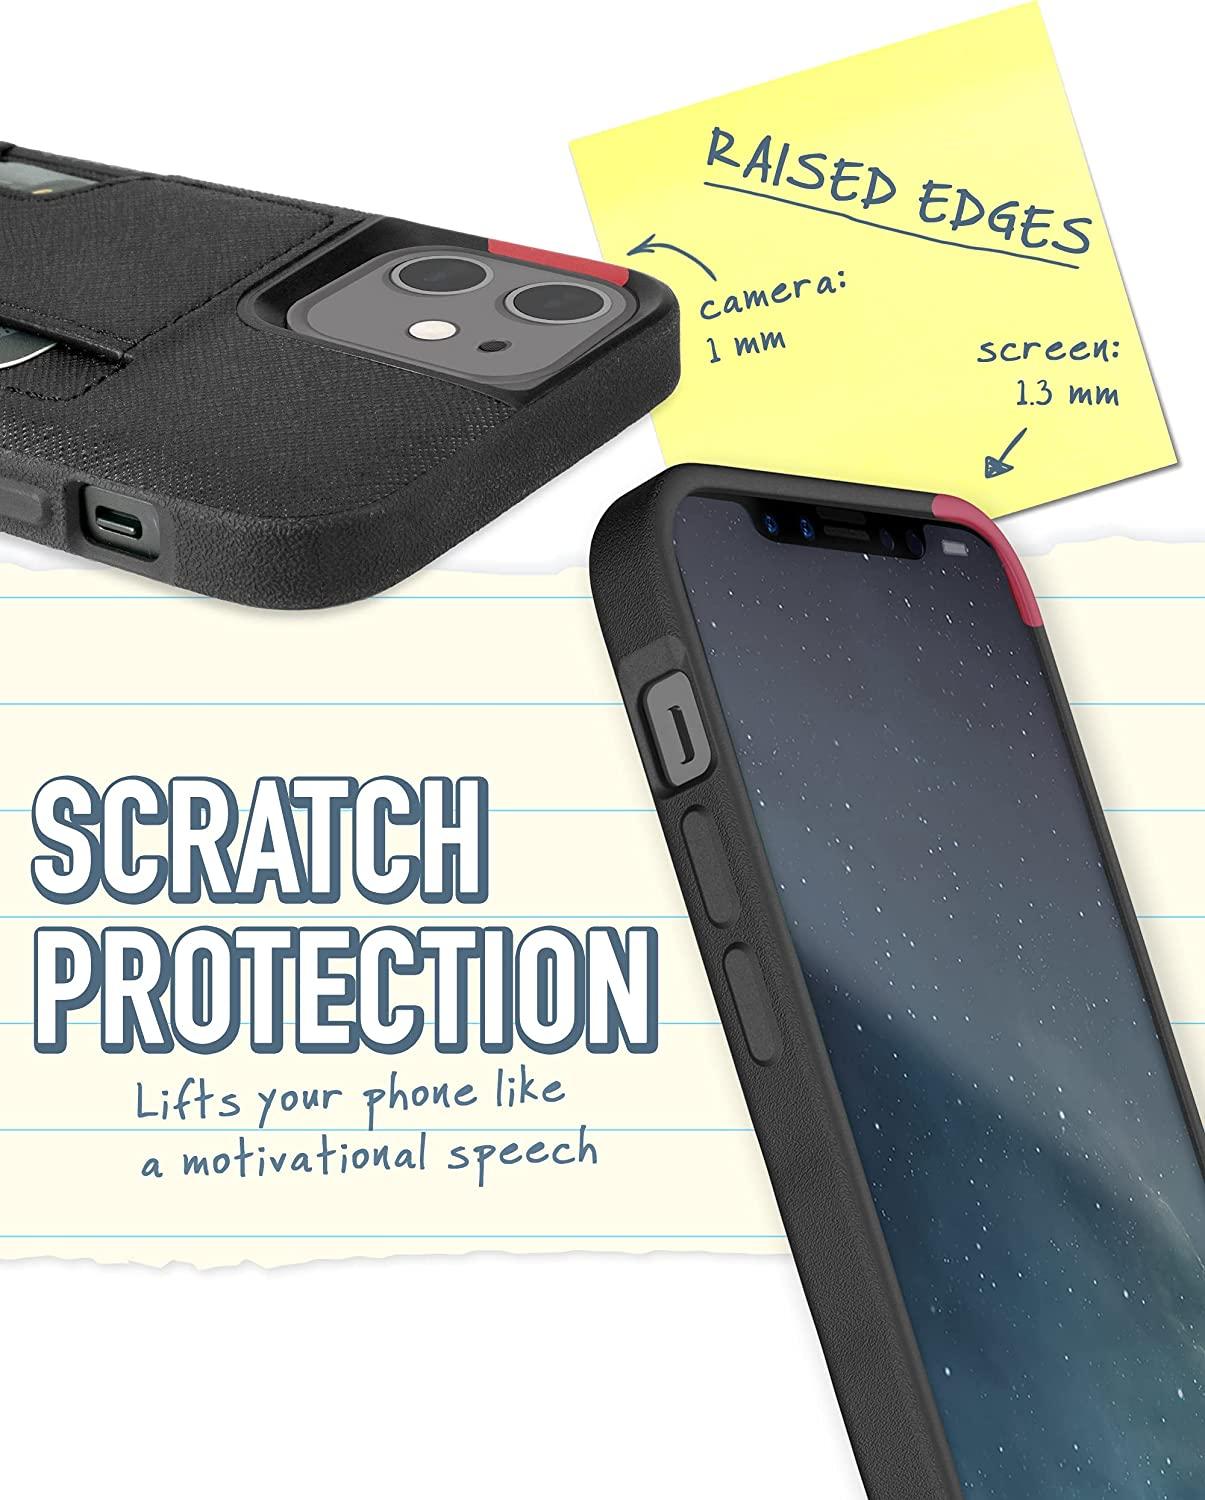 Smartish iPhone 15 Pro Wallet Case - Wallet Slayer Vol. 1 [Slim + Protective] Credit Card Holder - Black Tie Affair